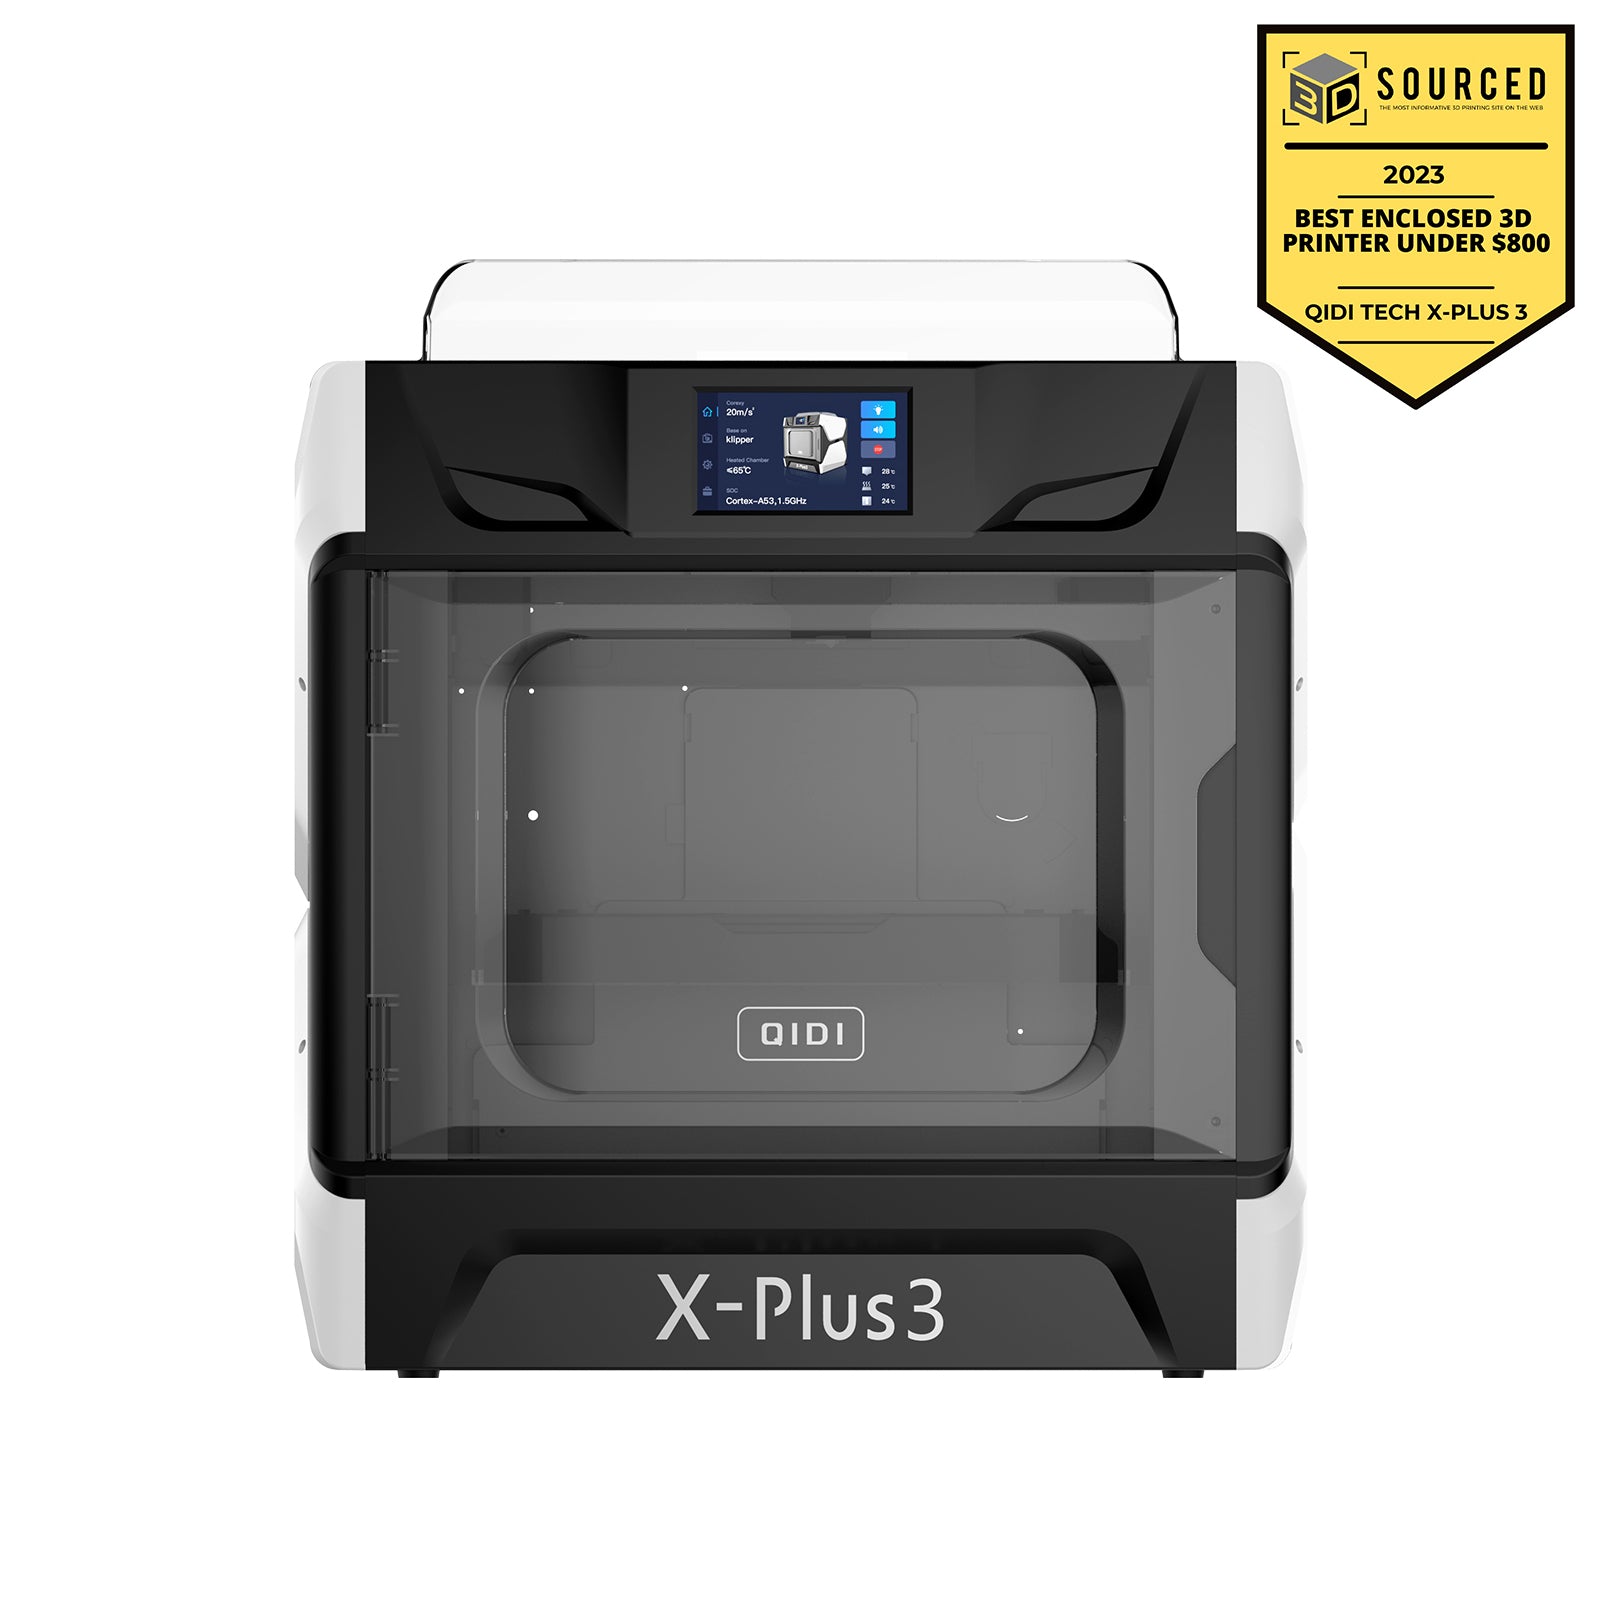 user-friendly interface on qidi x-plus 3d printer